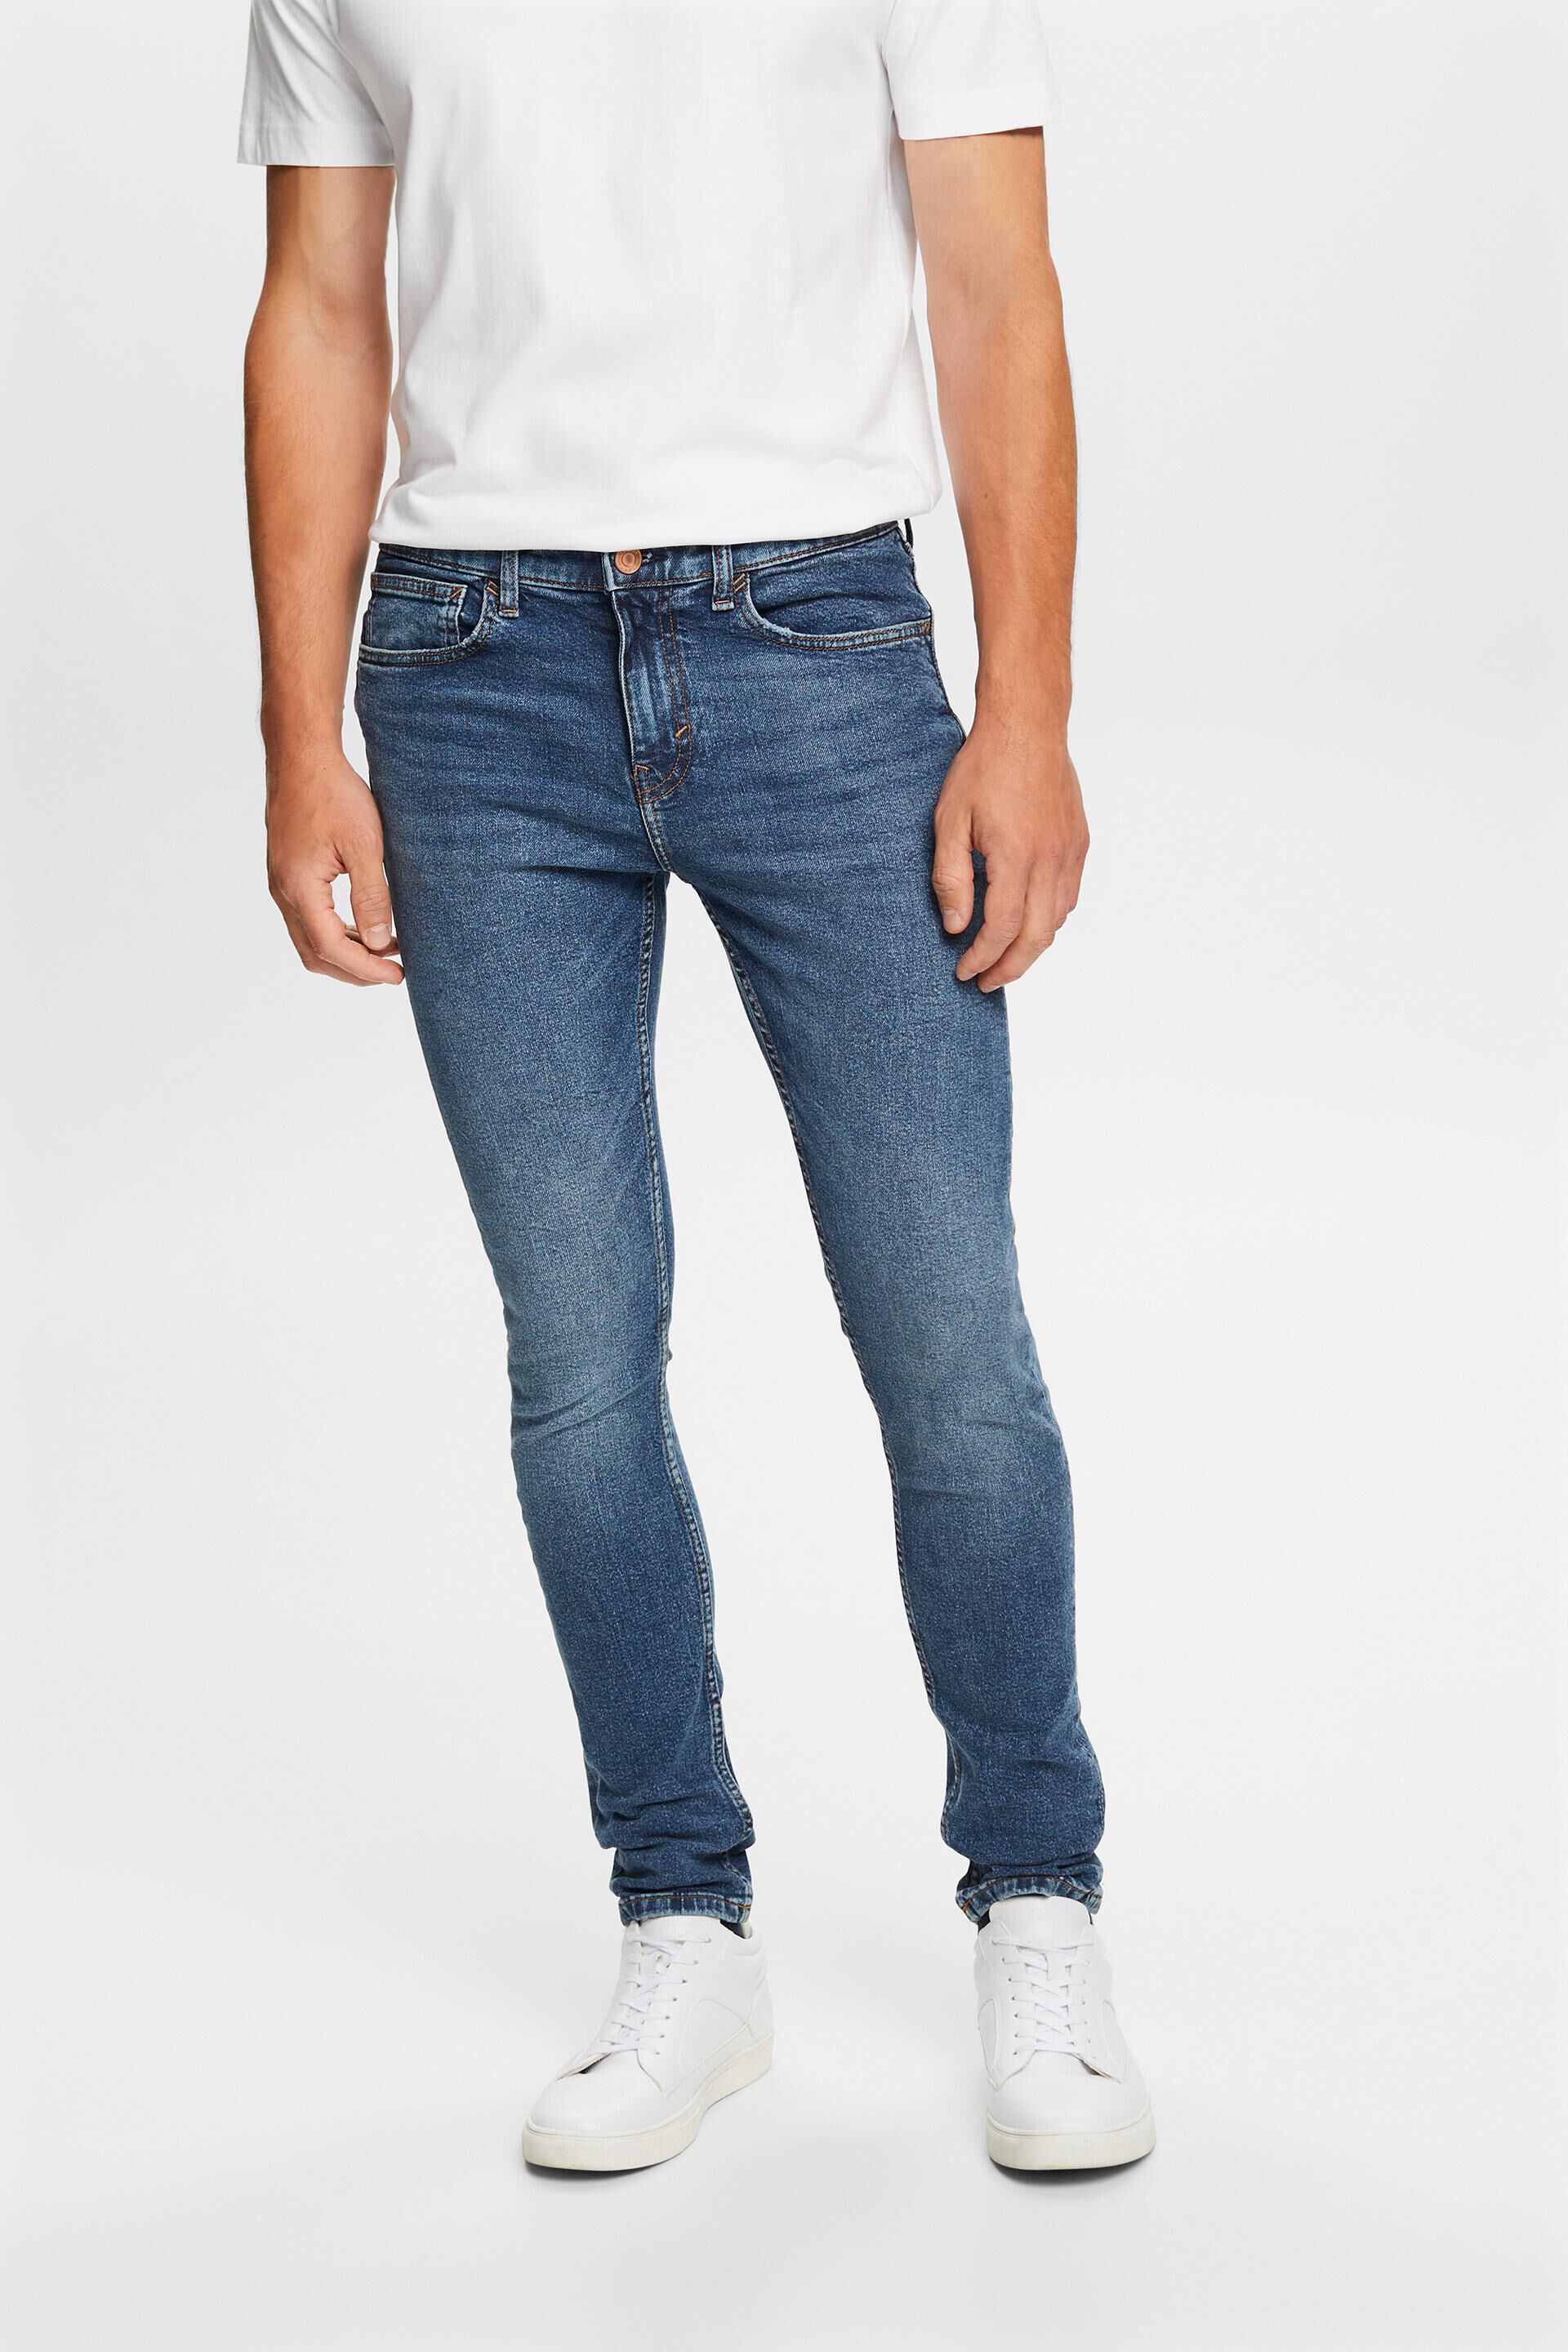 Esprit Mid-Rise Skinny Jeans